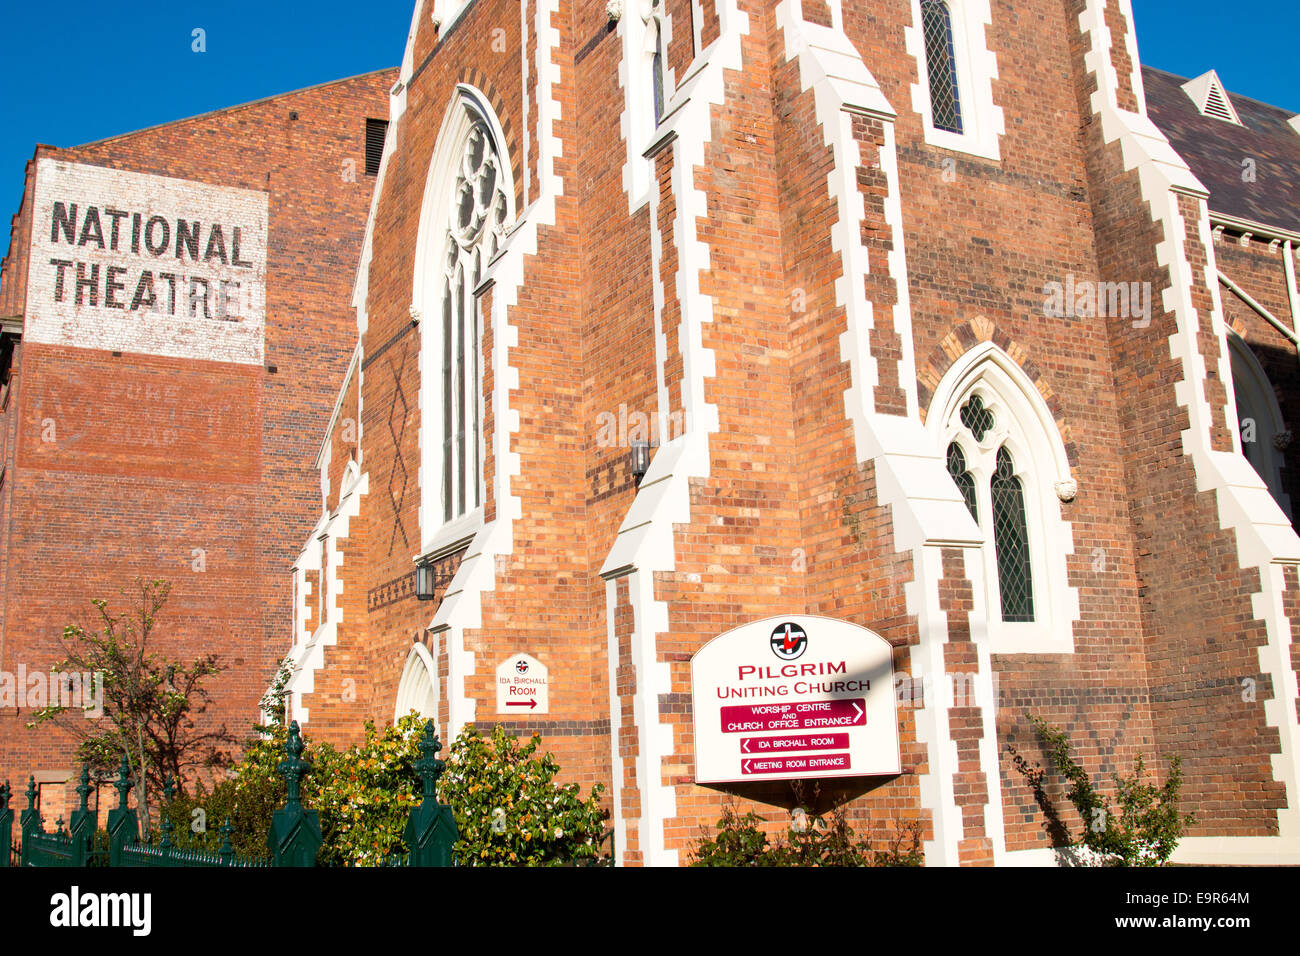 Launceston national theatre and pilgrim uniting church, tasmania,australia Stock Photo